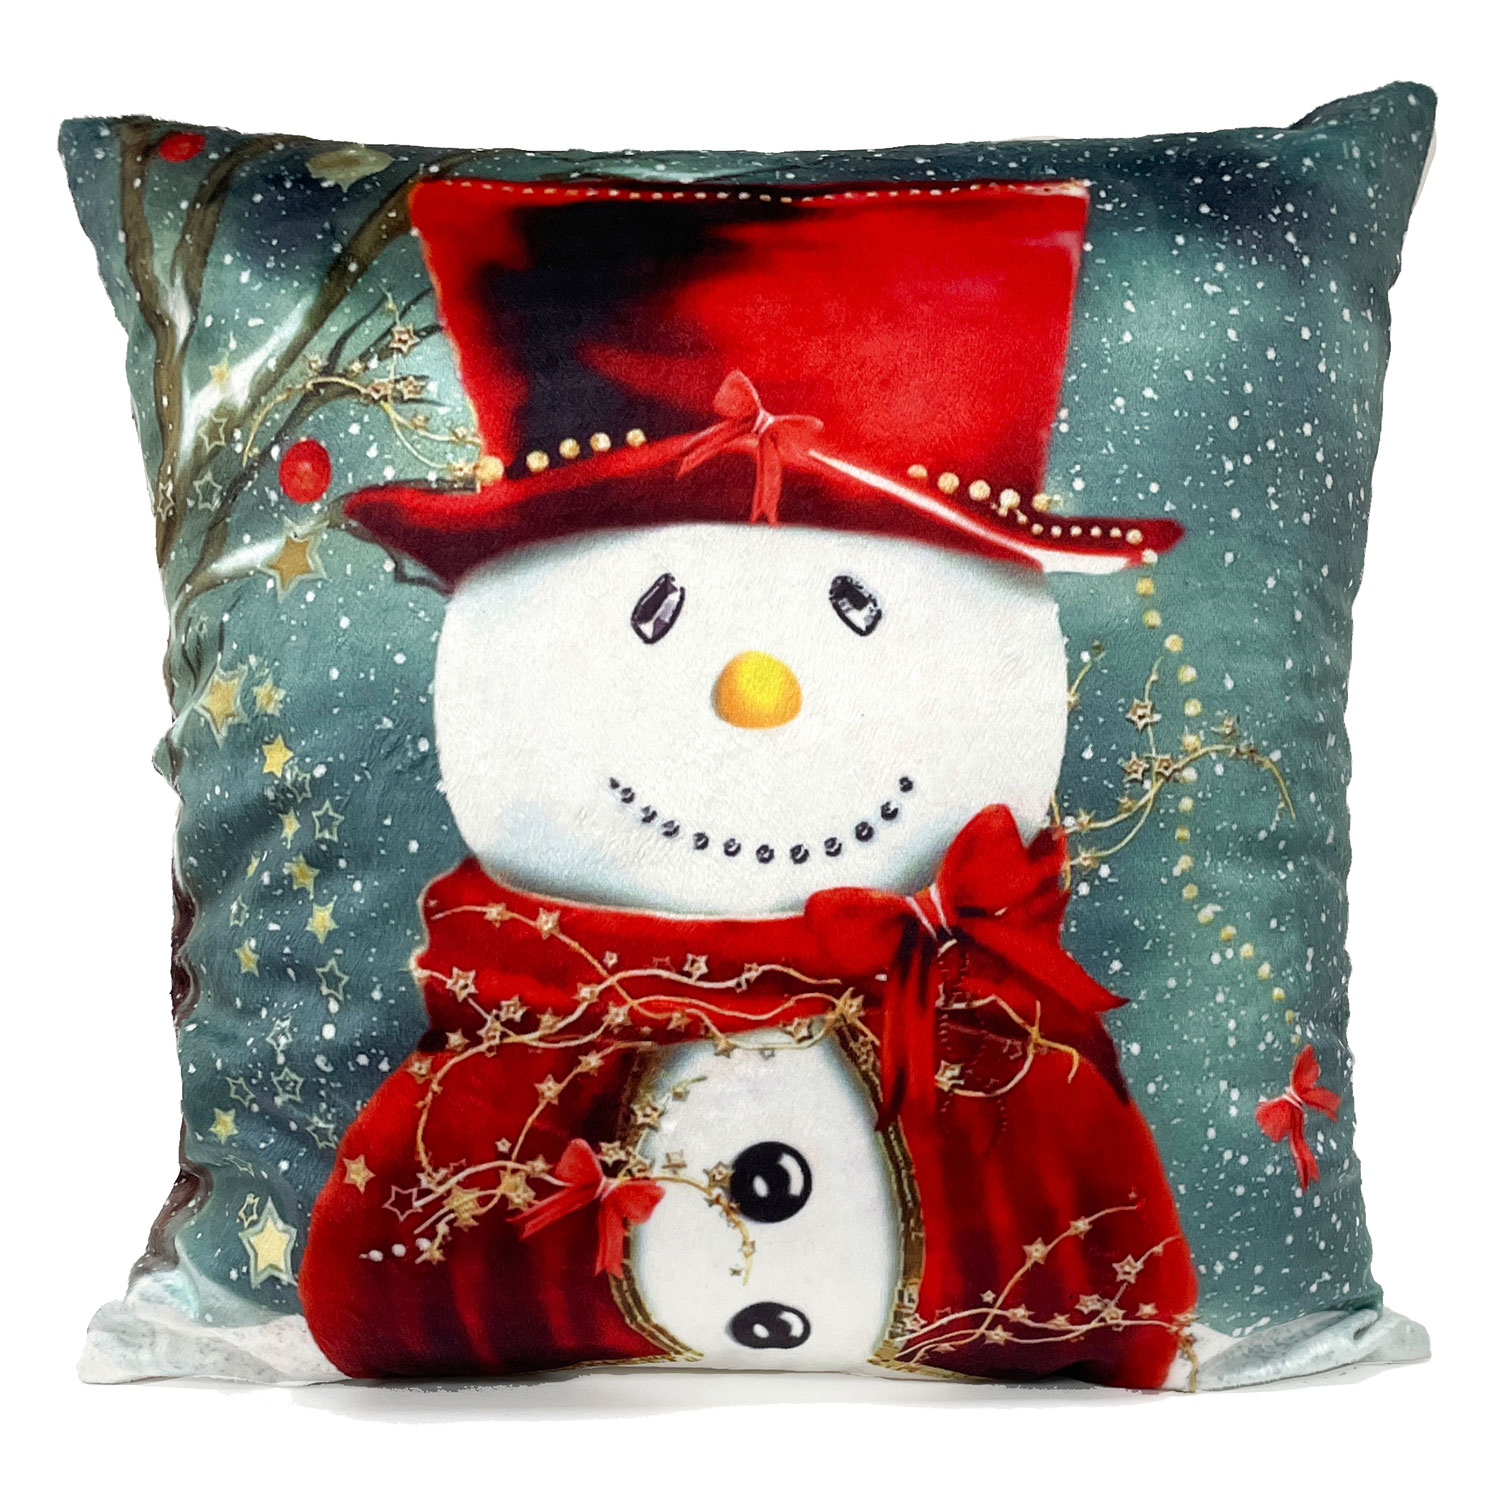 Printed photoreal cushion, 17"x17" - Christmas snowman